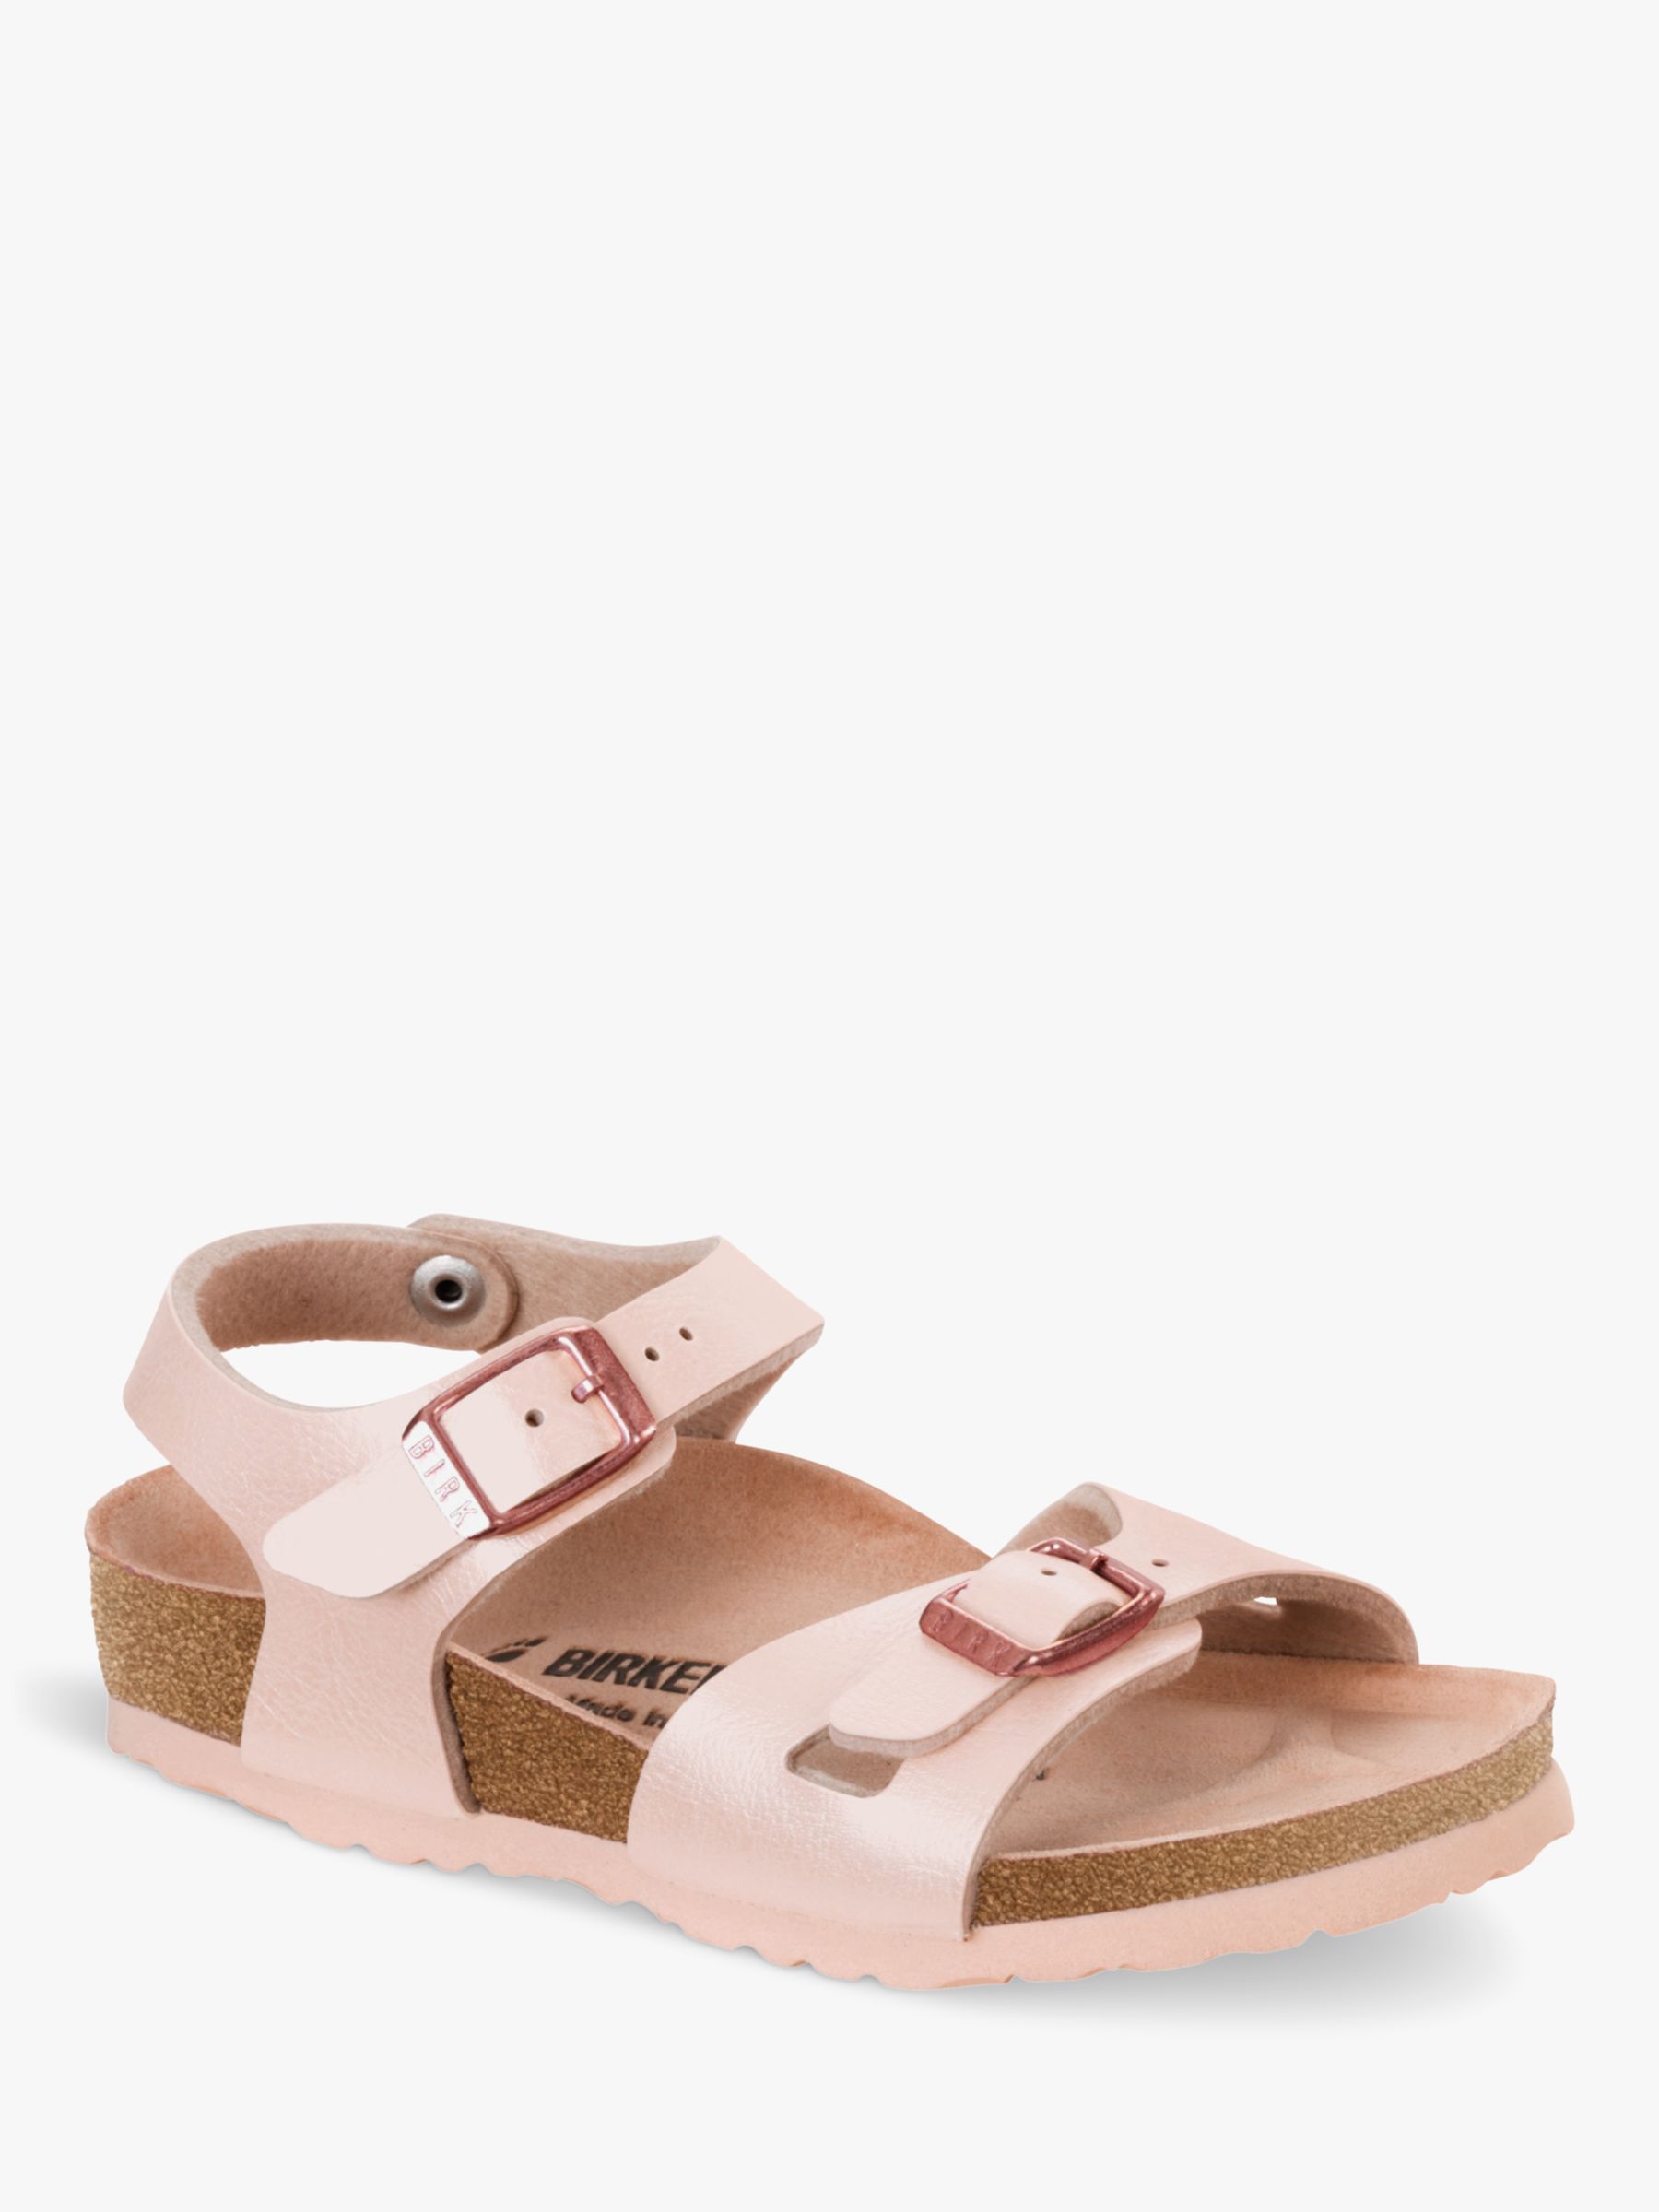 Birkenstock Kids' Rio Sandals, Light Pink, EU30